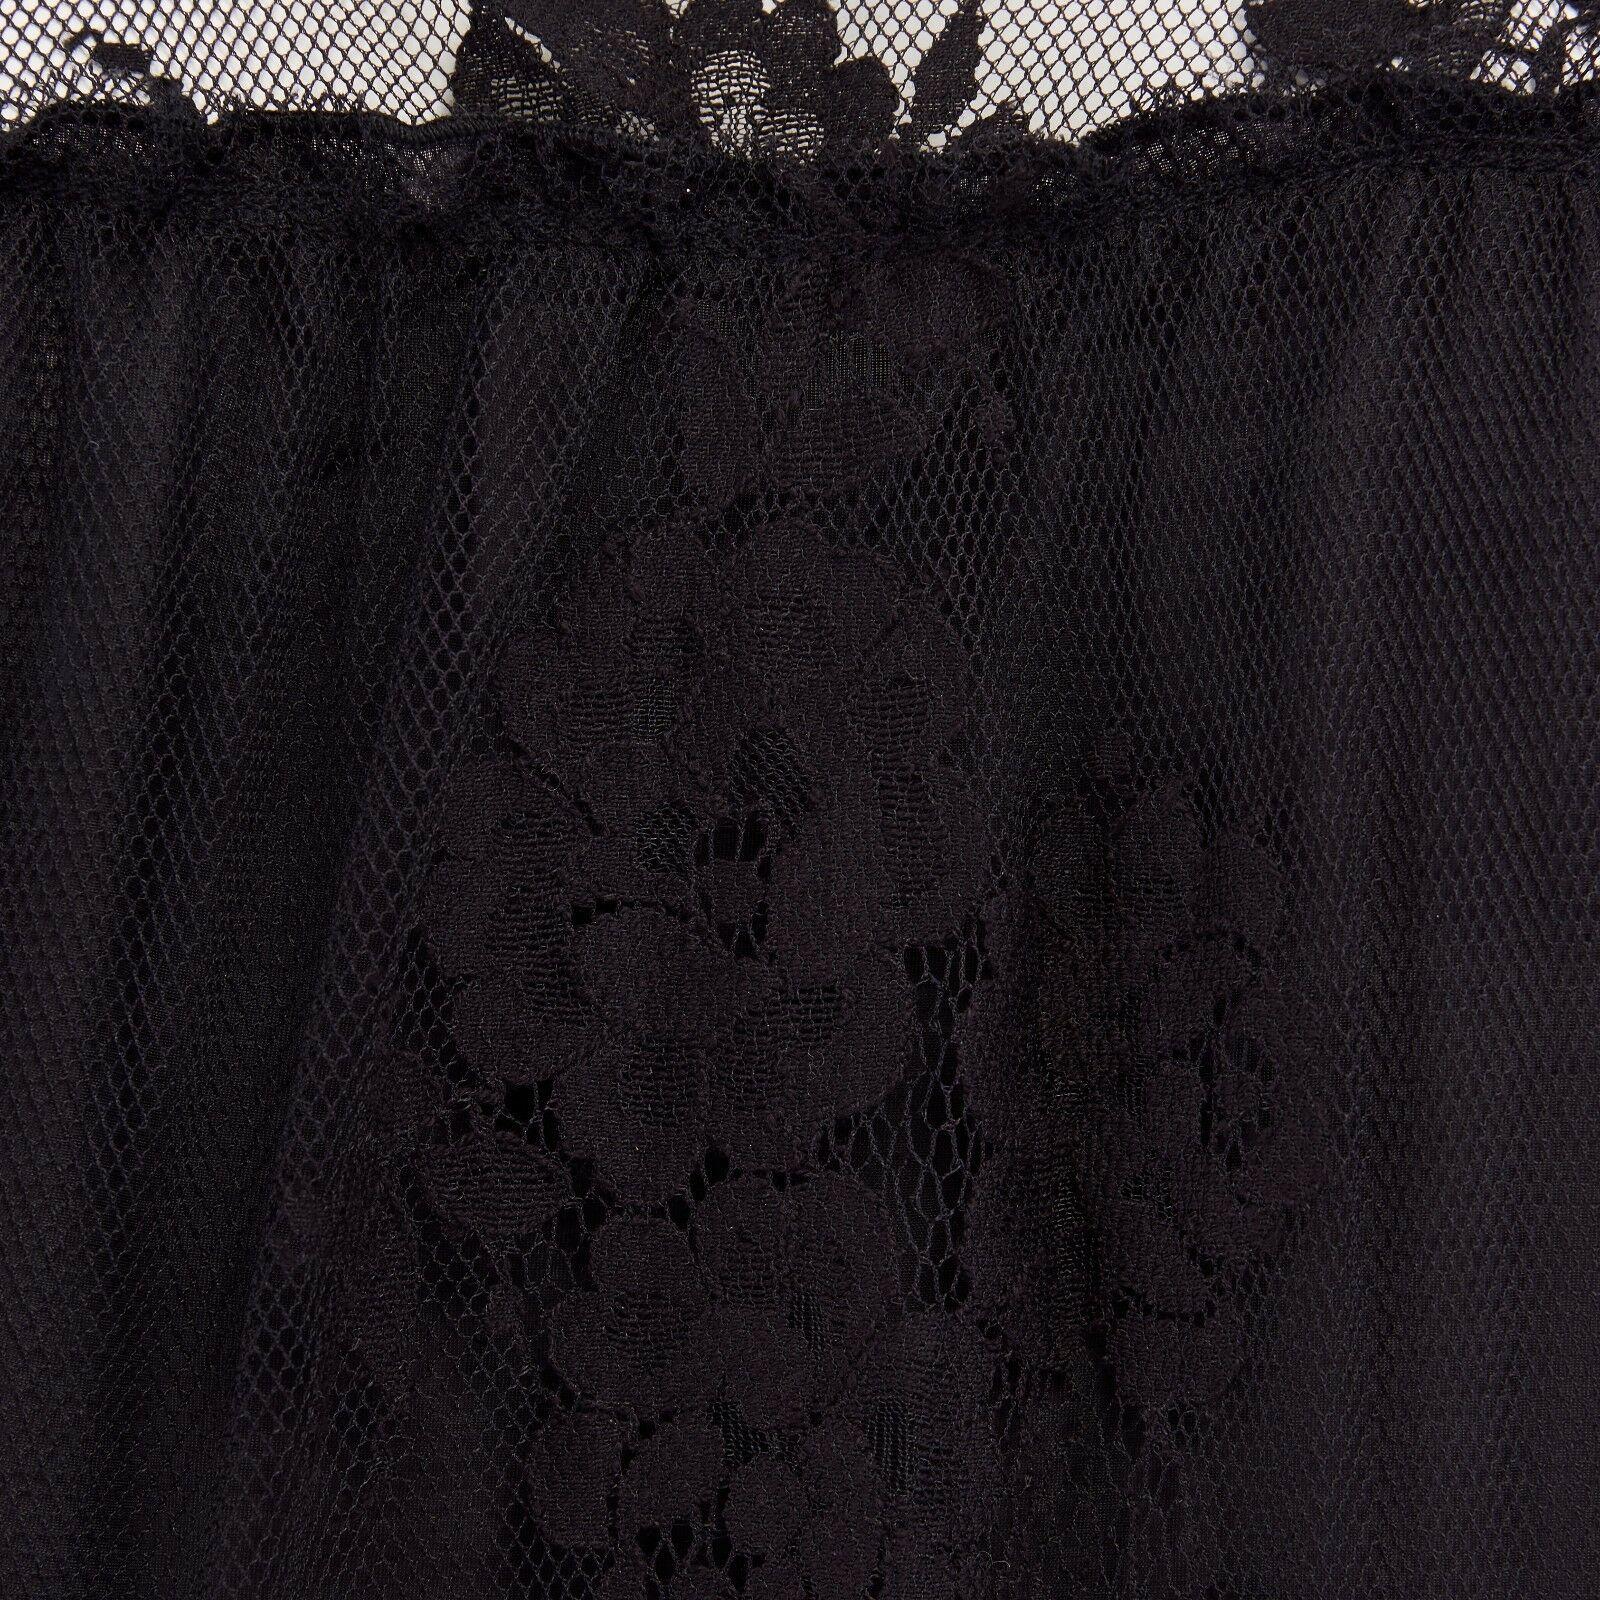 SIMONE BARBIERI TWIN-SET black floral lace short sleeve lined mini dress M 4